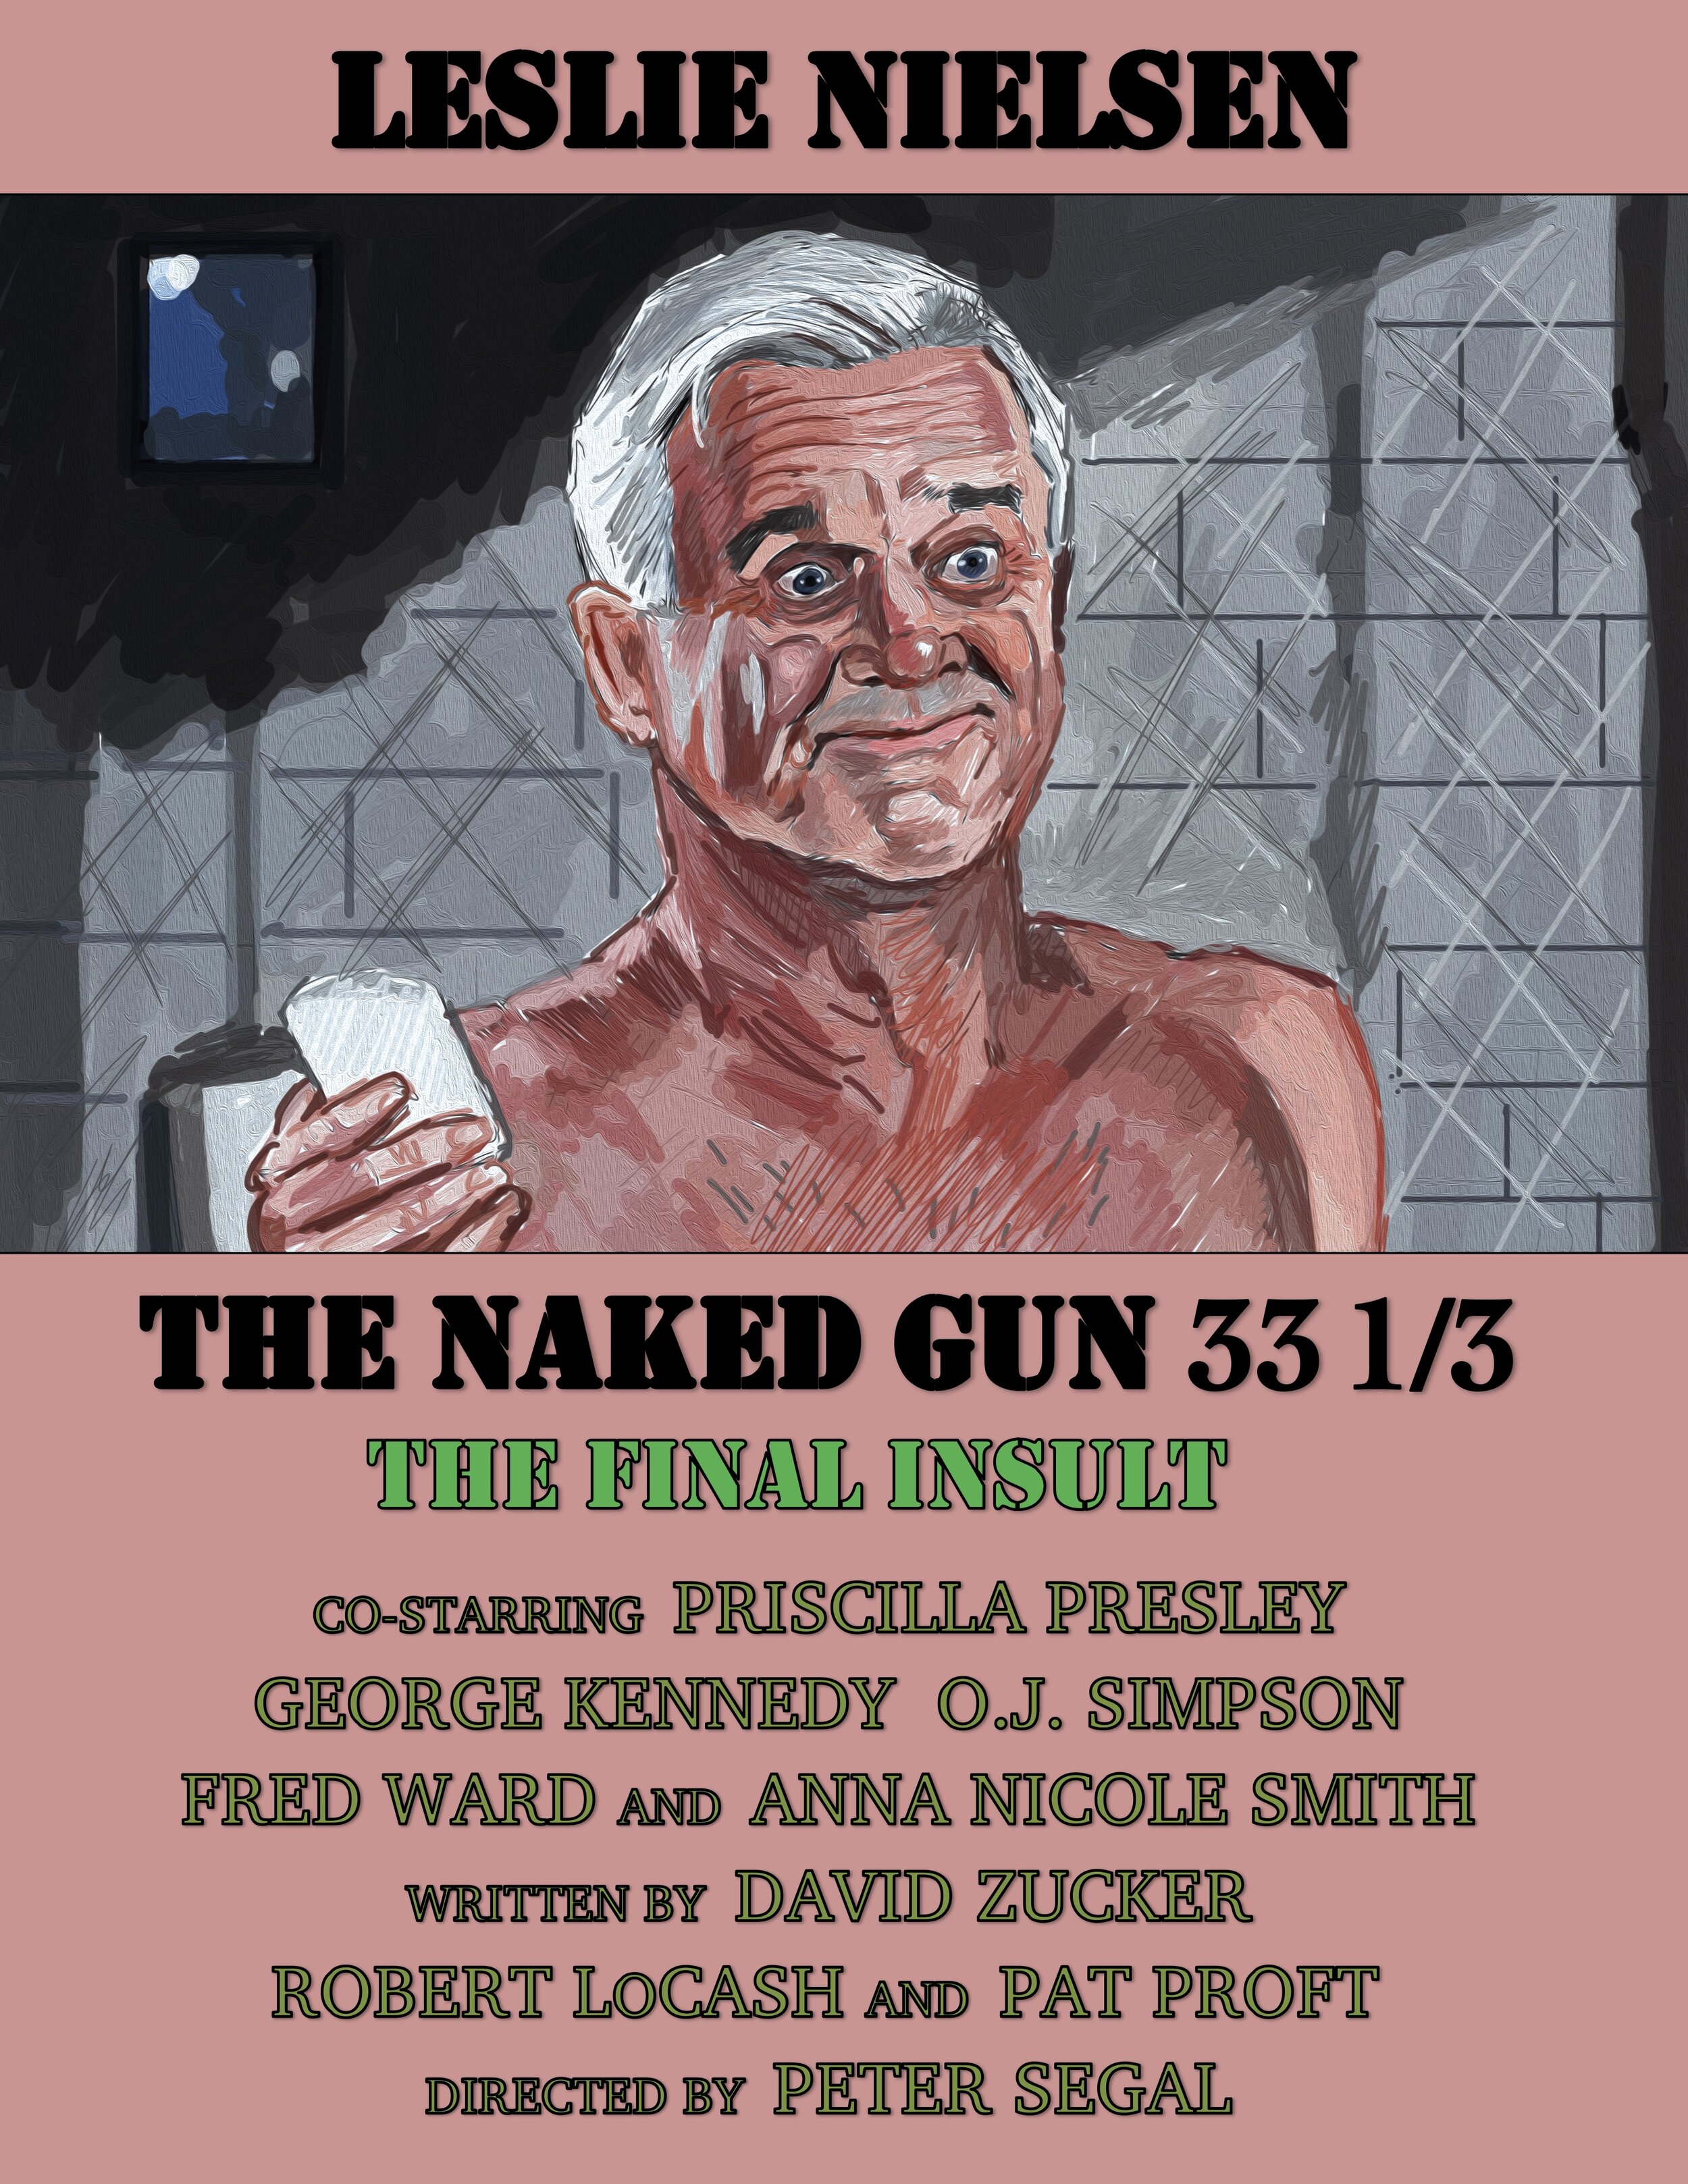 The Naked Gun 33 1/3 (1994)